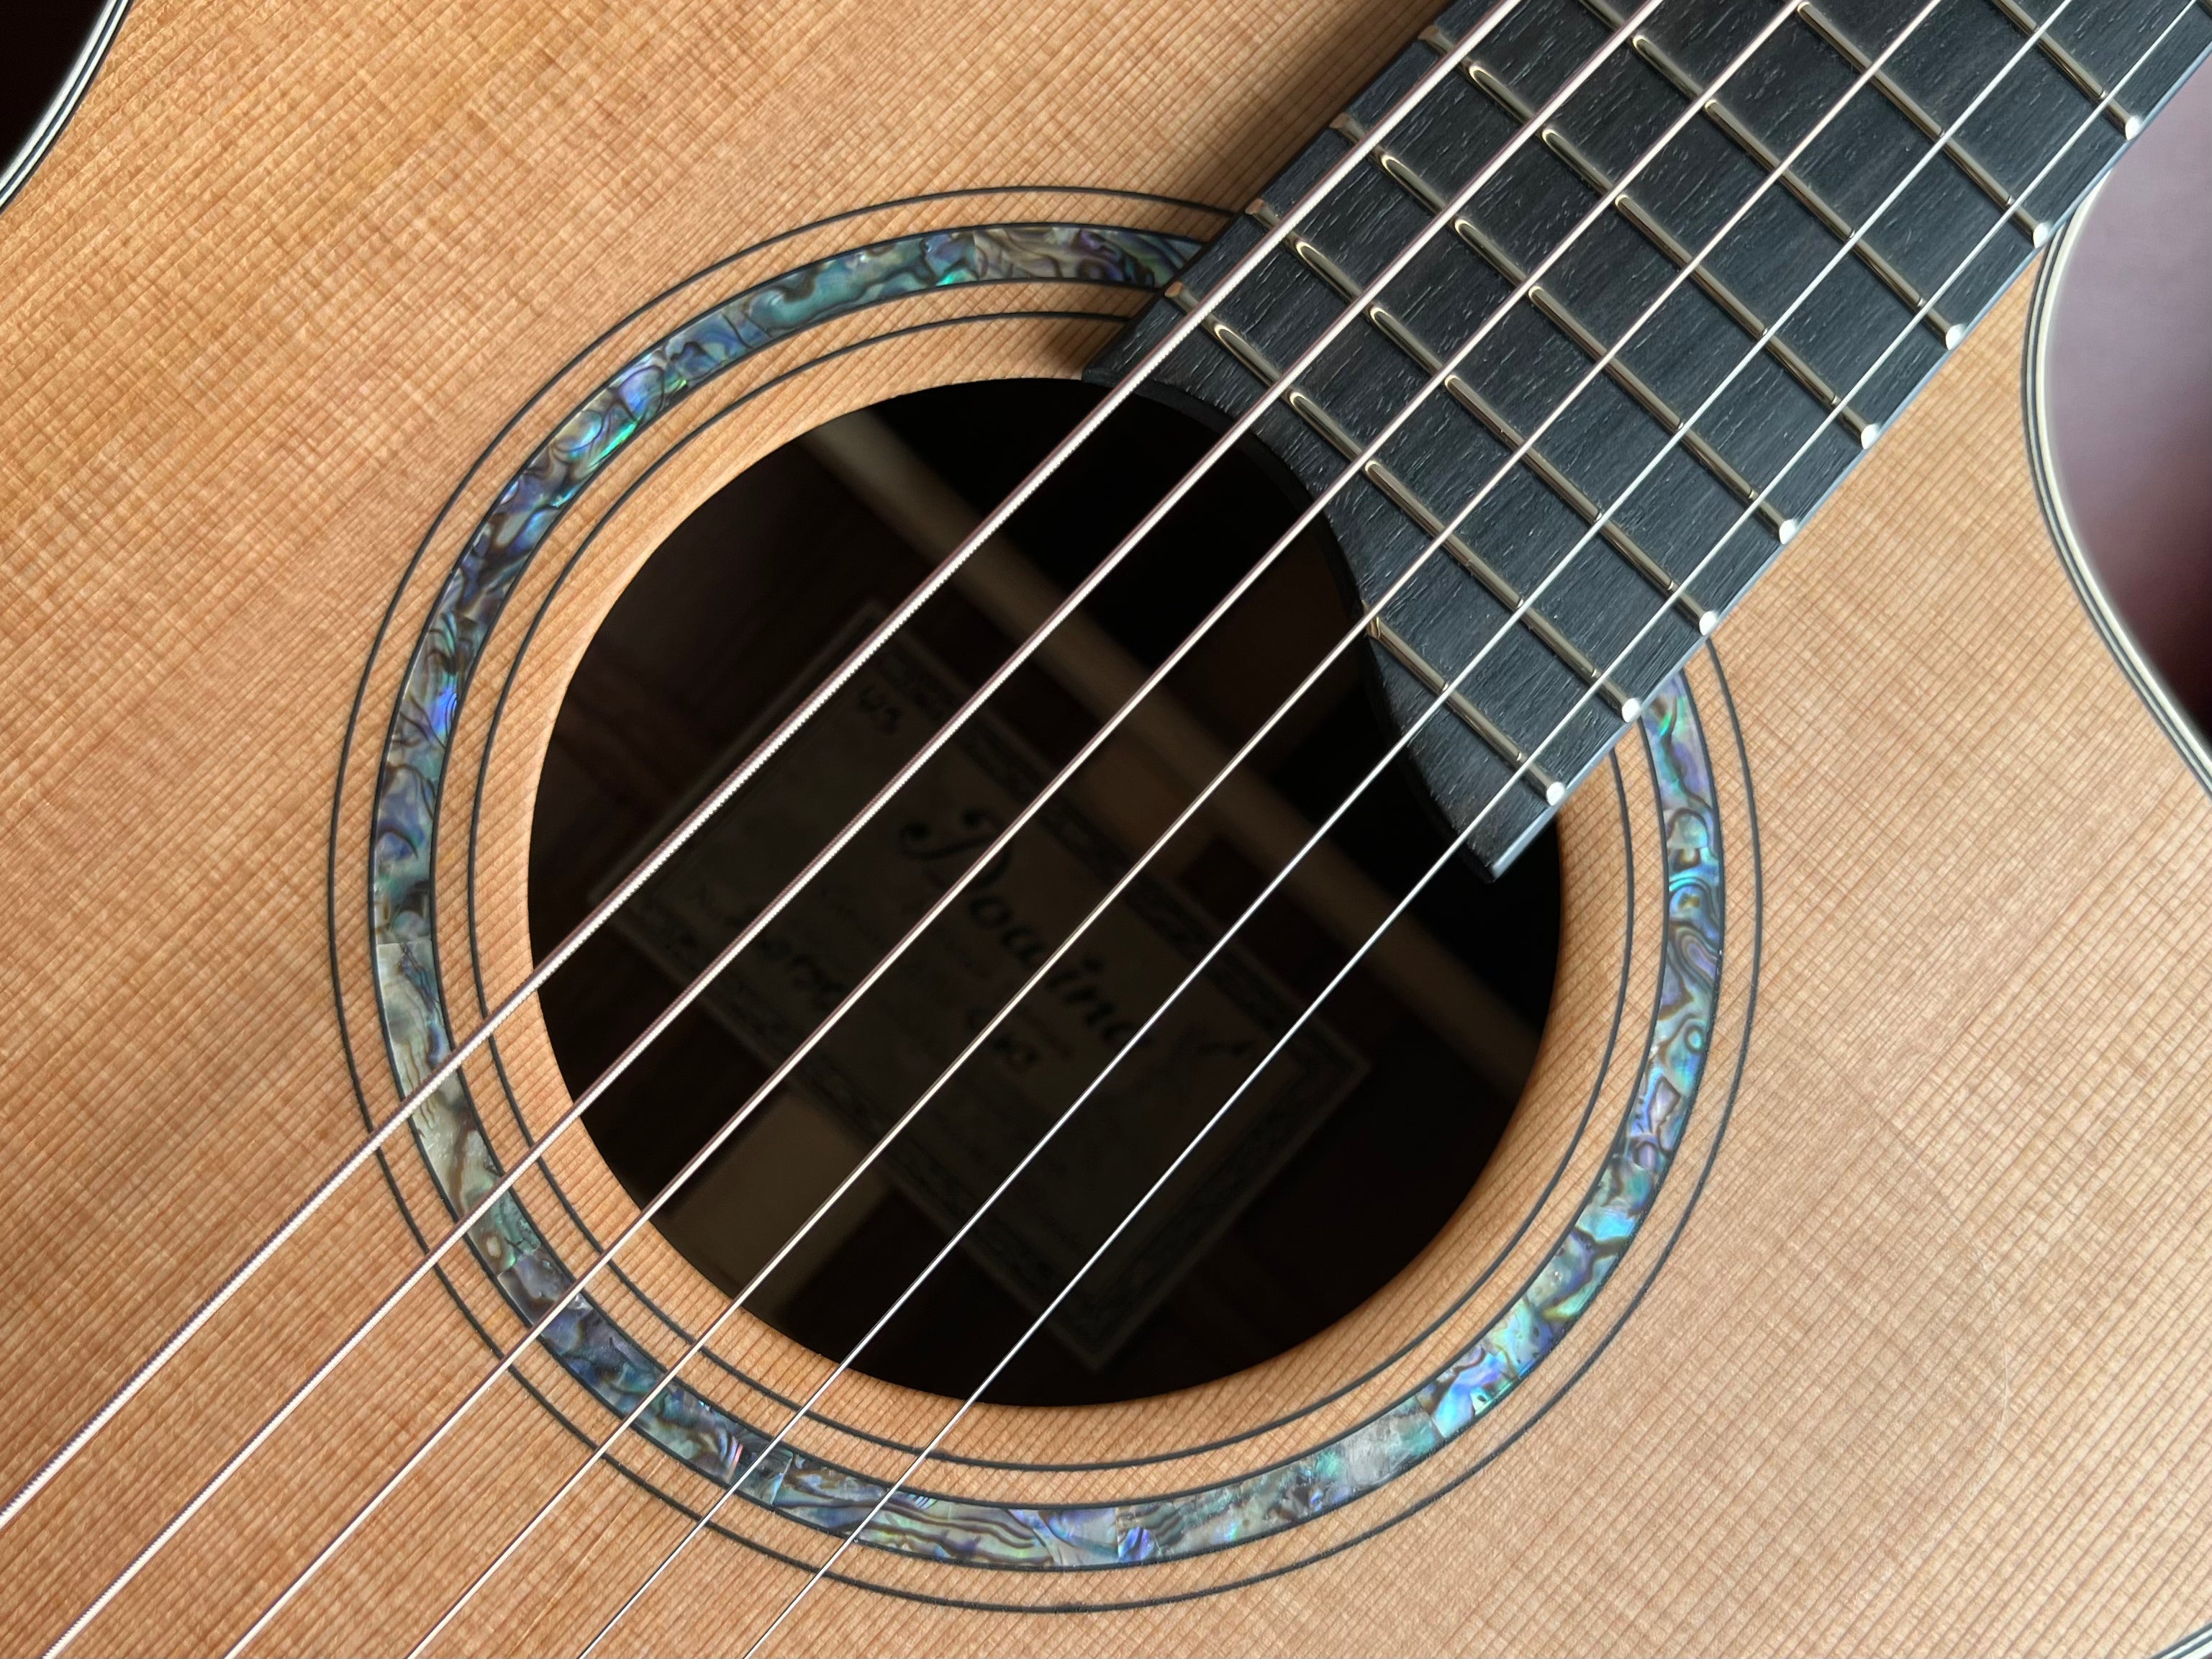 Dowina Granadillo GAC Masters Series, Acoustic Guitar for sale at Richards Guitars.